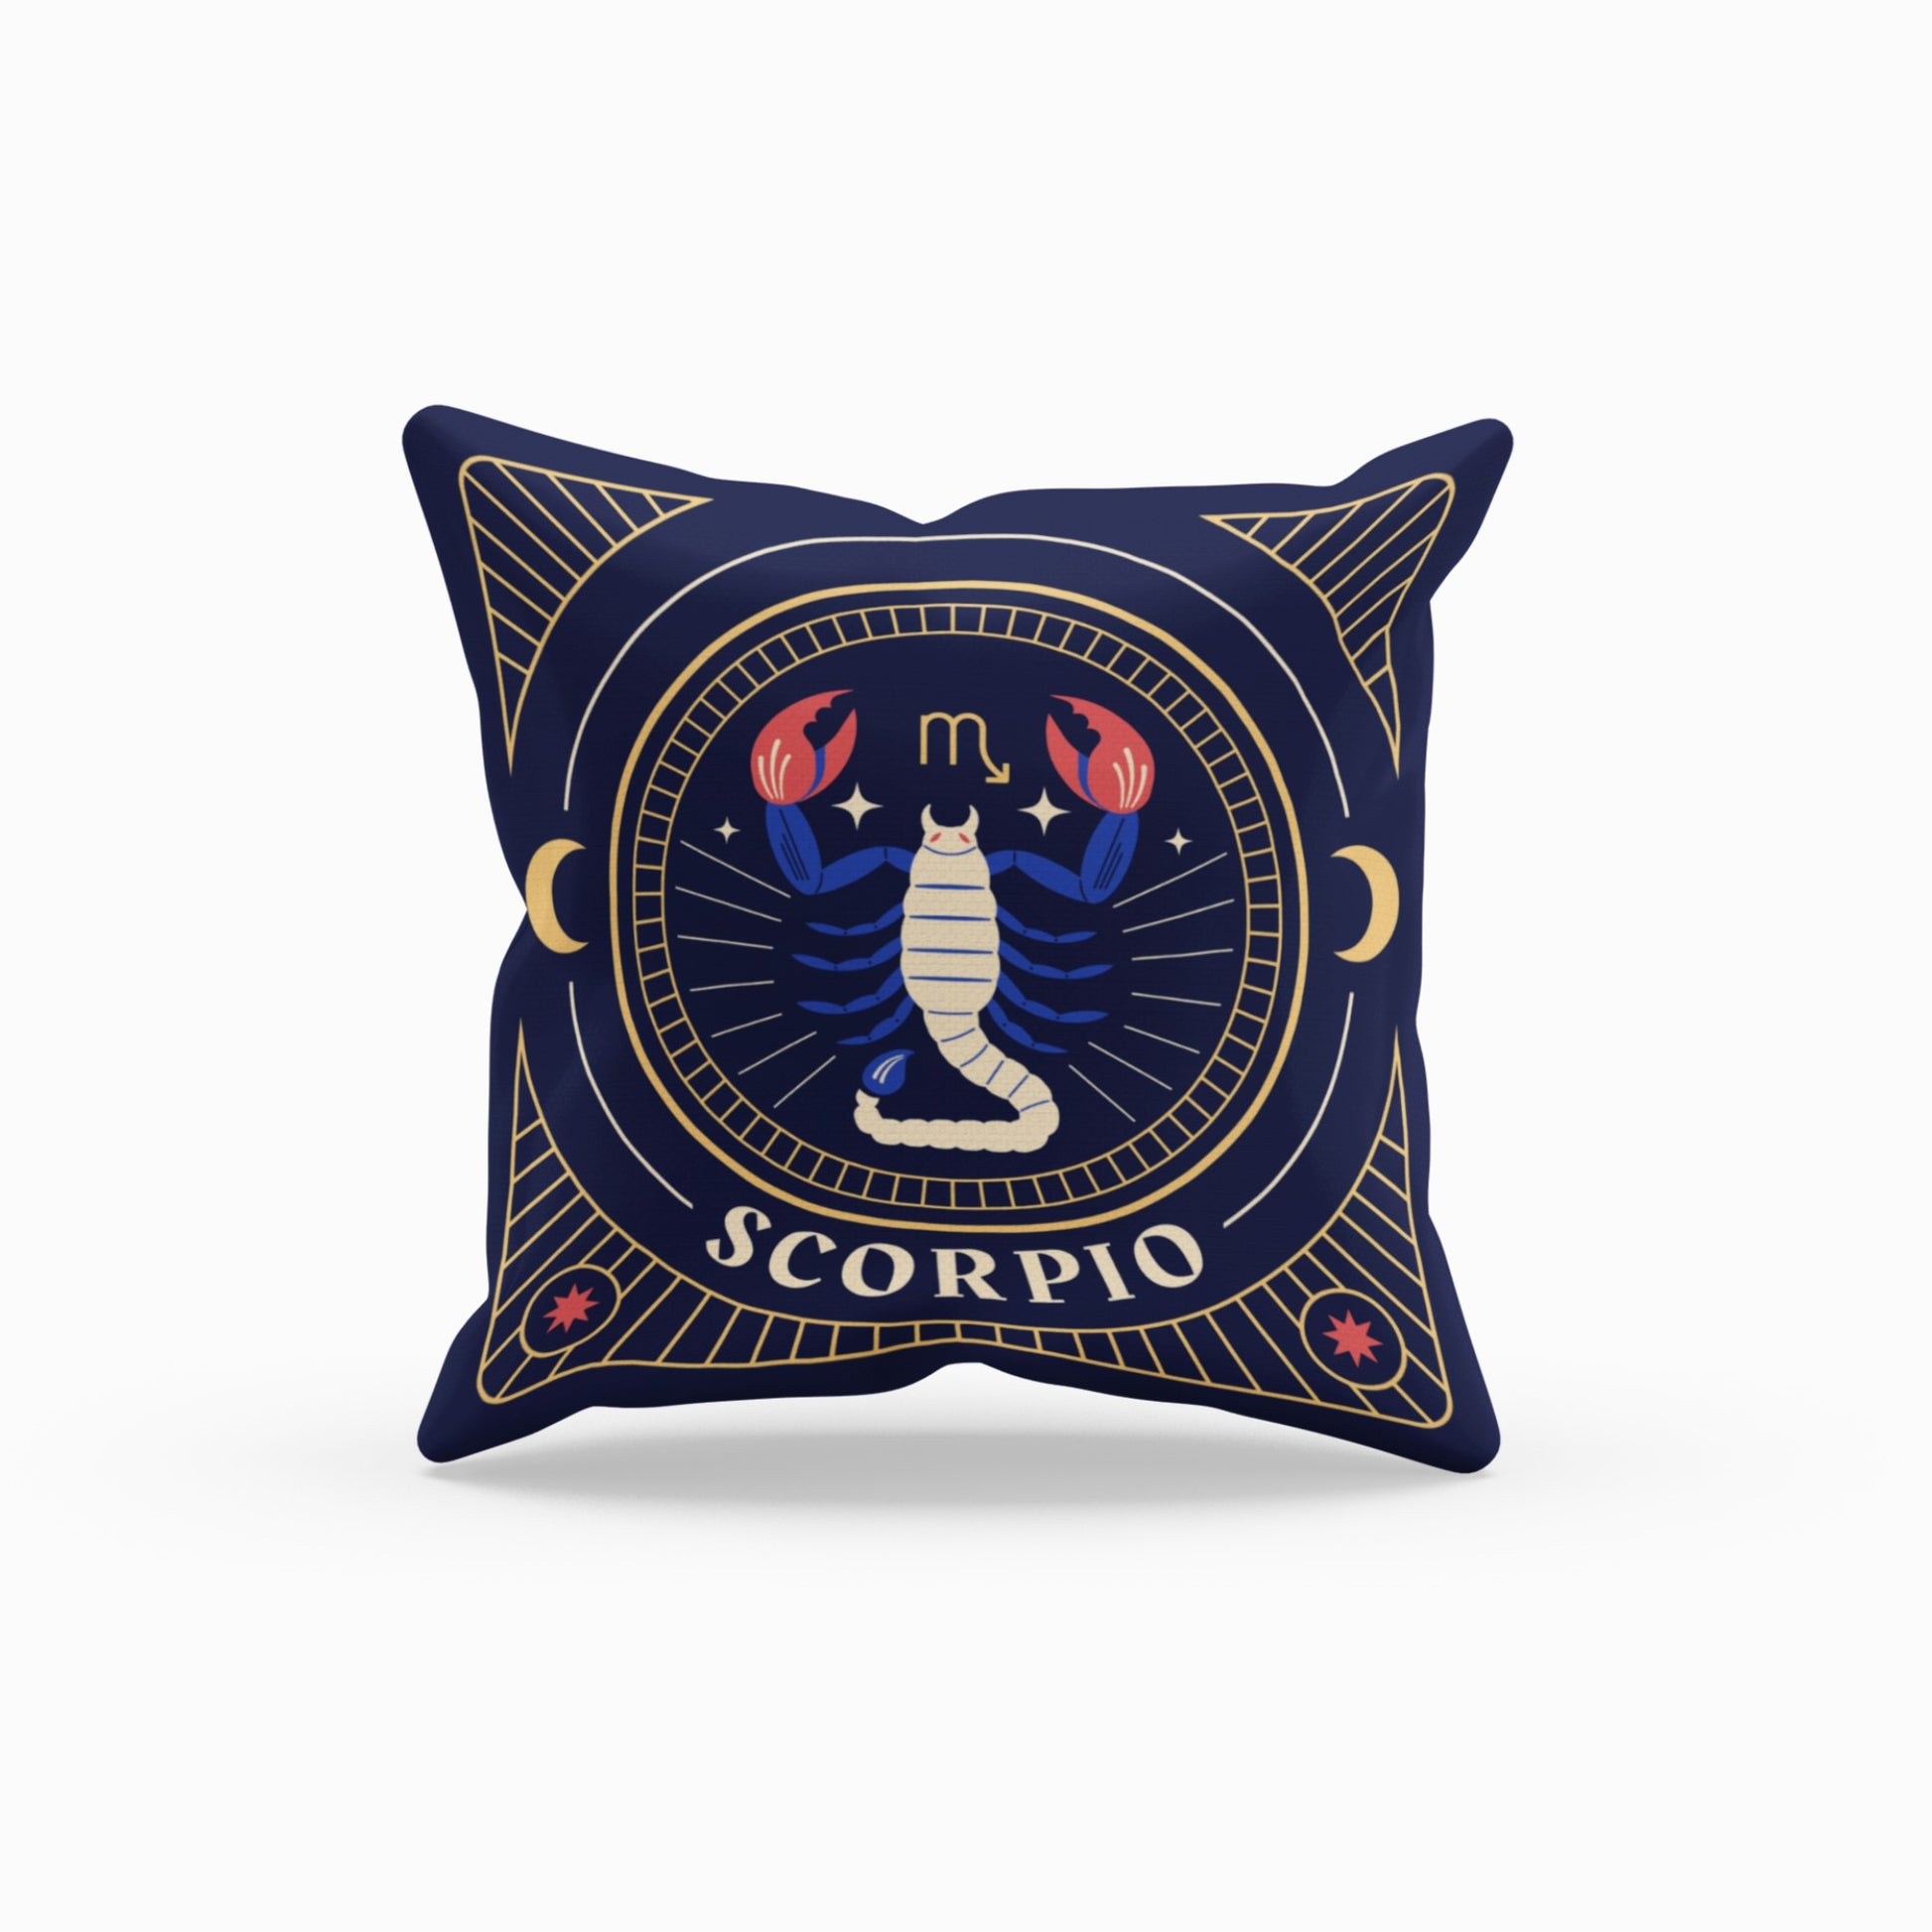 Astrology-themed Scorpio Decor Pillow